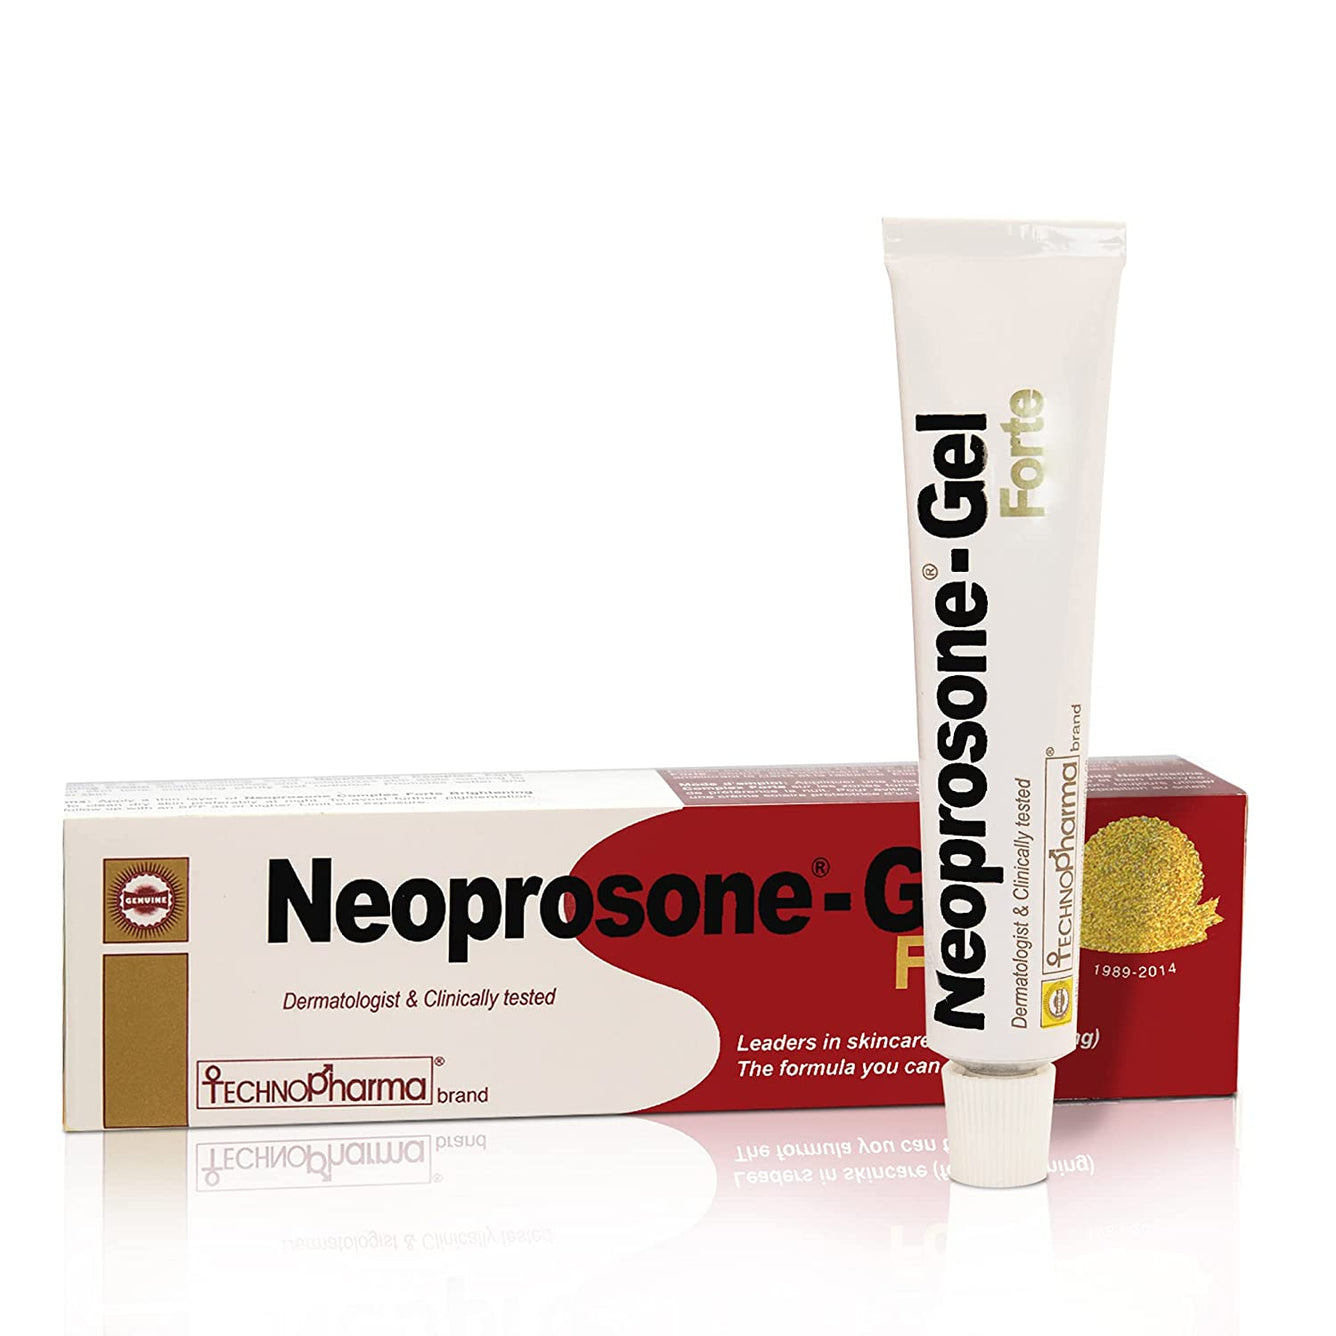 Neoprosone Brightening Gel 30g